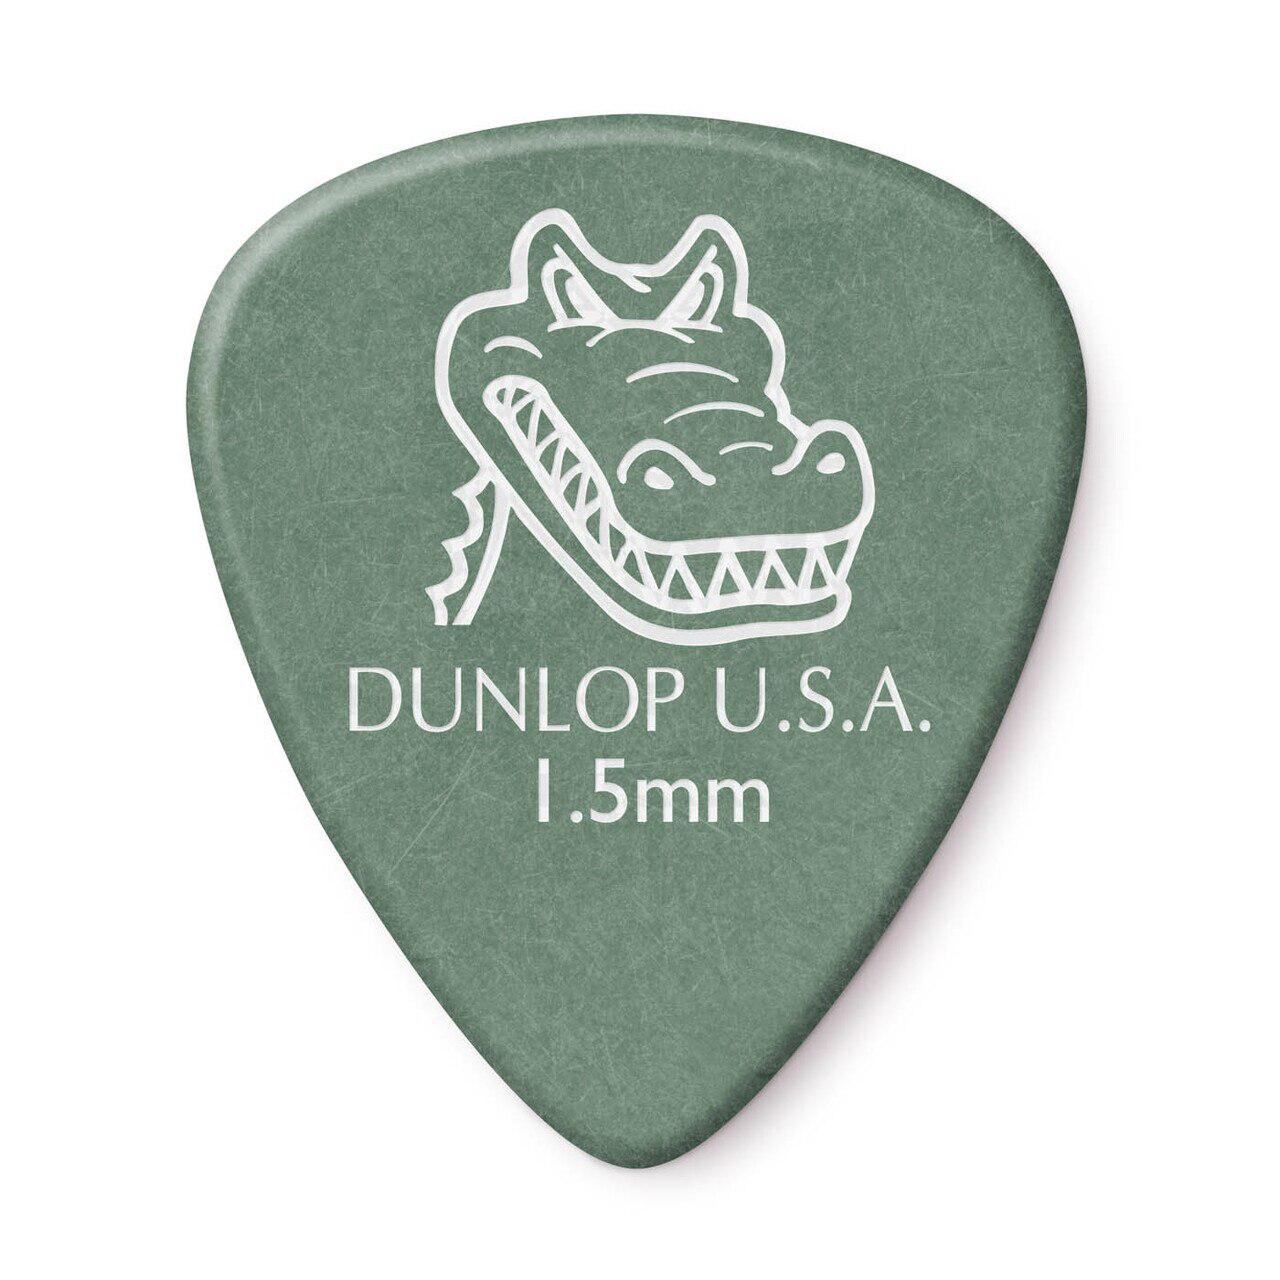 Dunlop - Plumilla Gator Grip, 1 Pieza Color: Verde Medida: 1.5 Mod.417B1.5_32